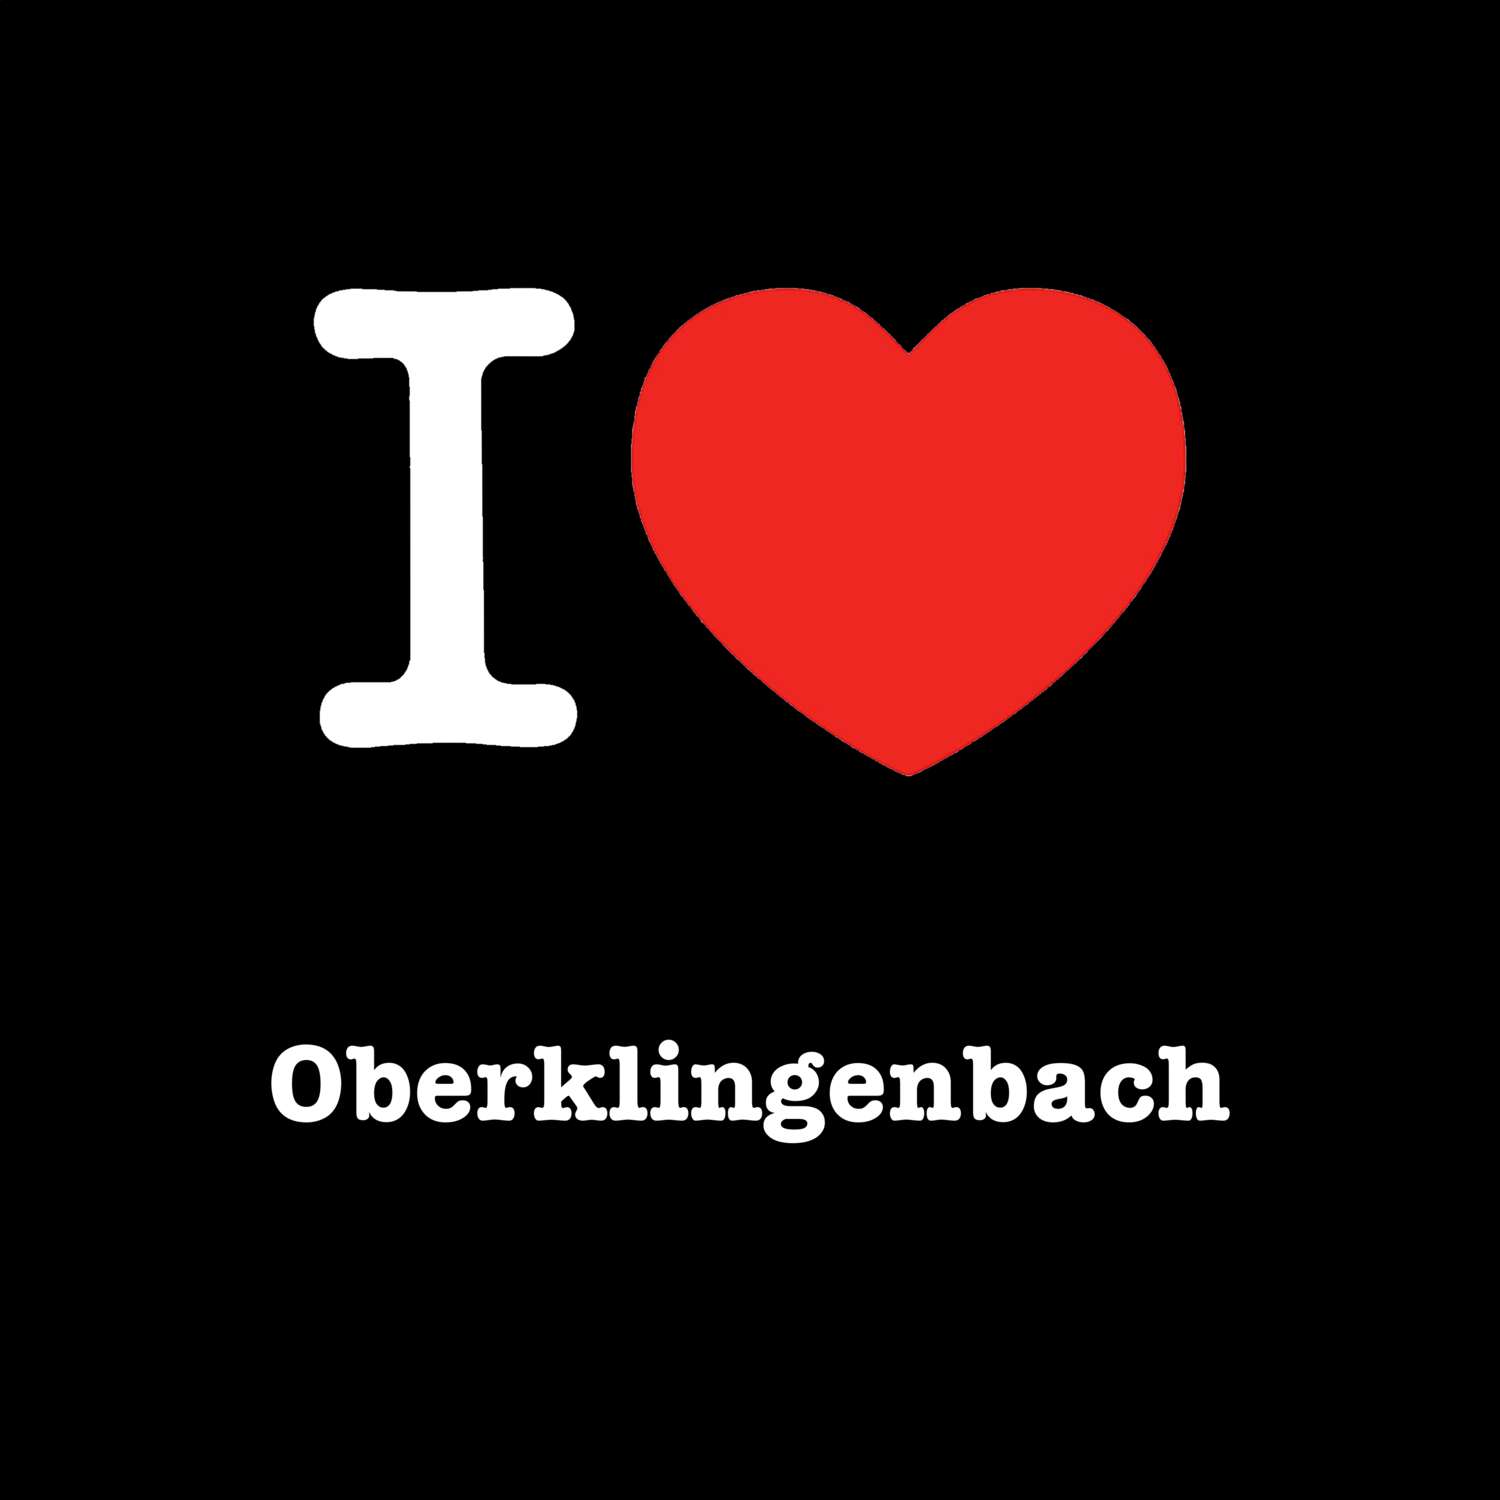 Oberklingenbach T-Shirt »I love«